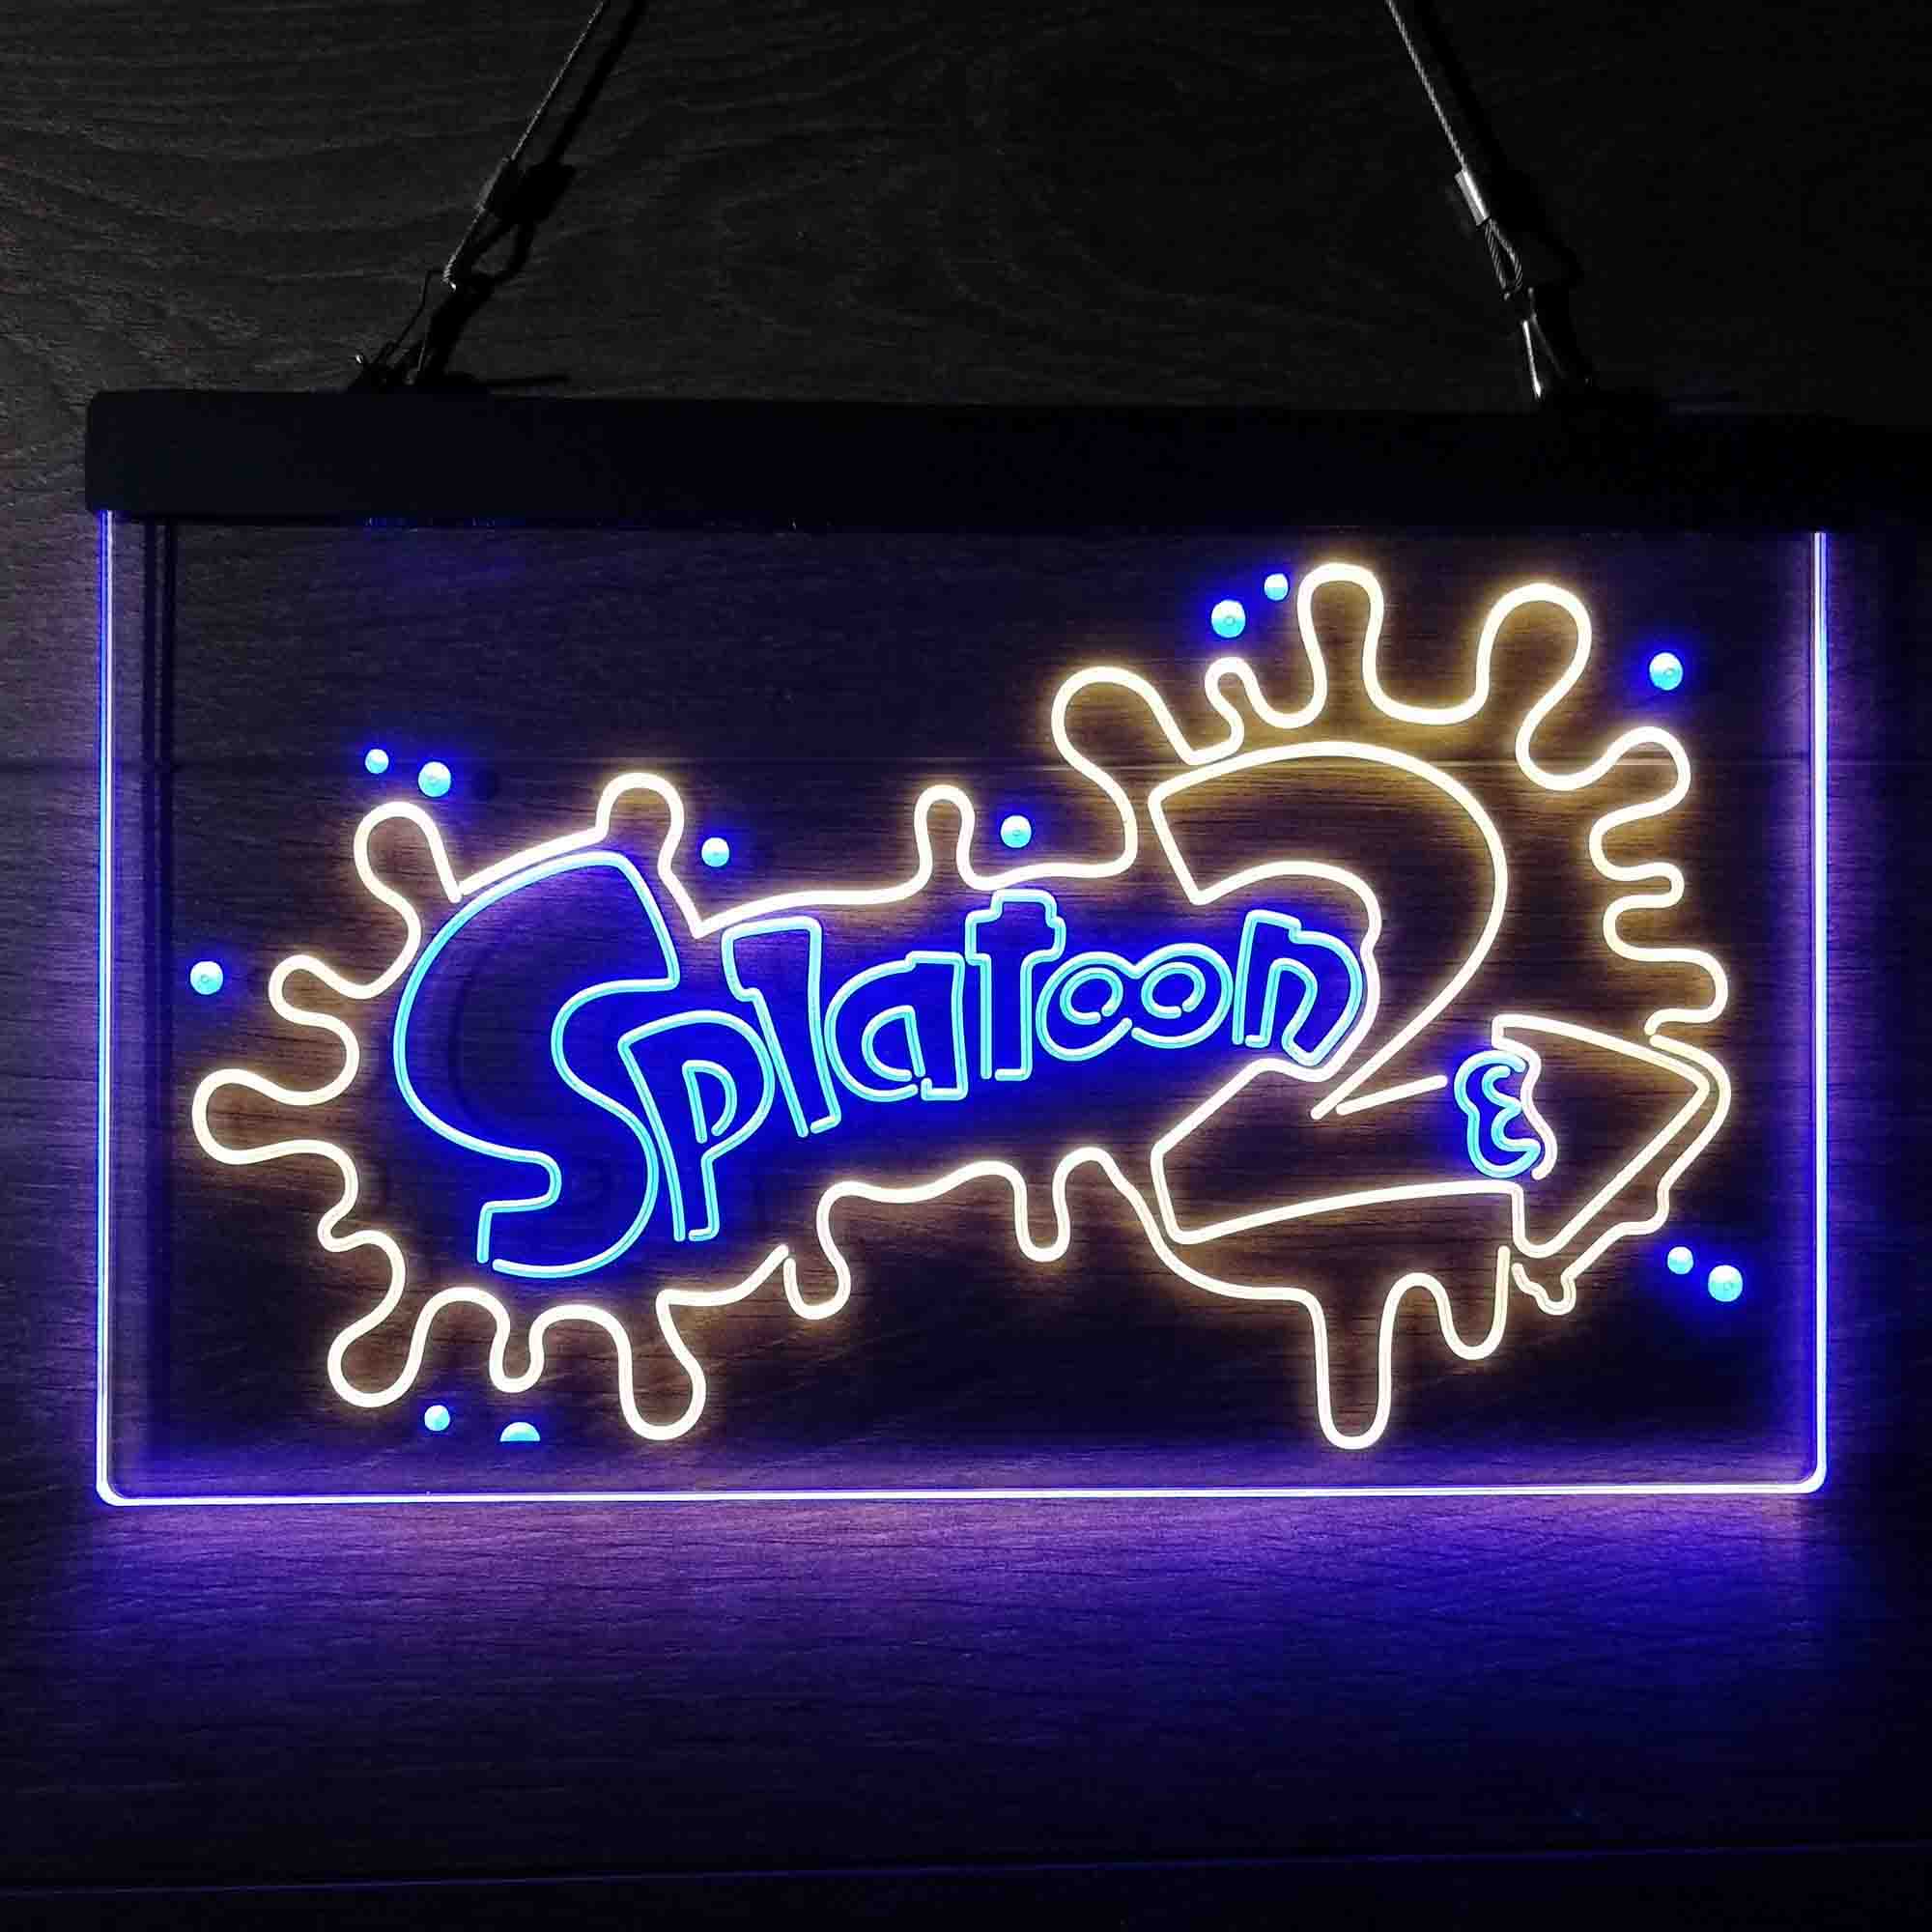 Splatoon 2 Neon LED Sign